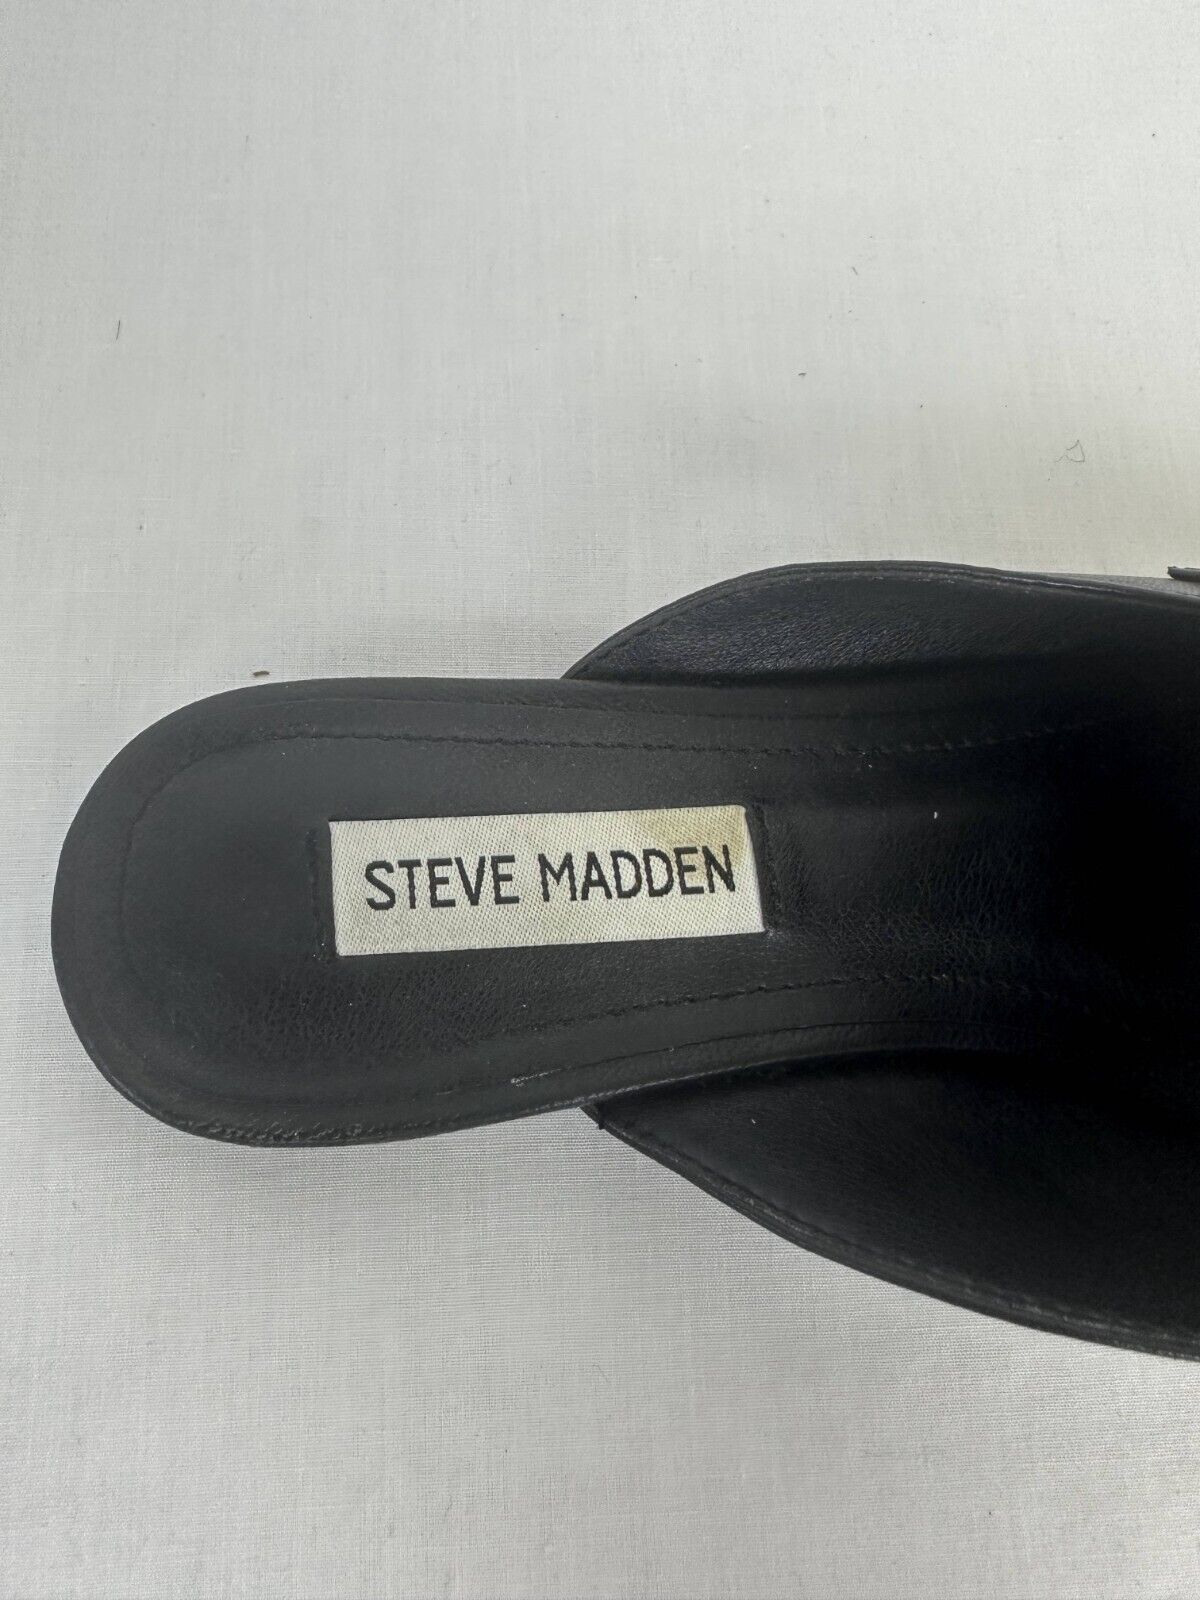 Steve Madden Womens 7.5 Flavor Mules Black Pointed Toe Slip On Leather 6602671